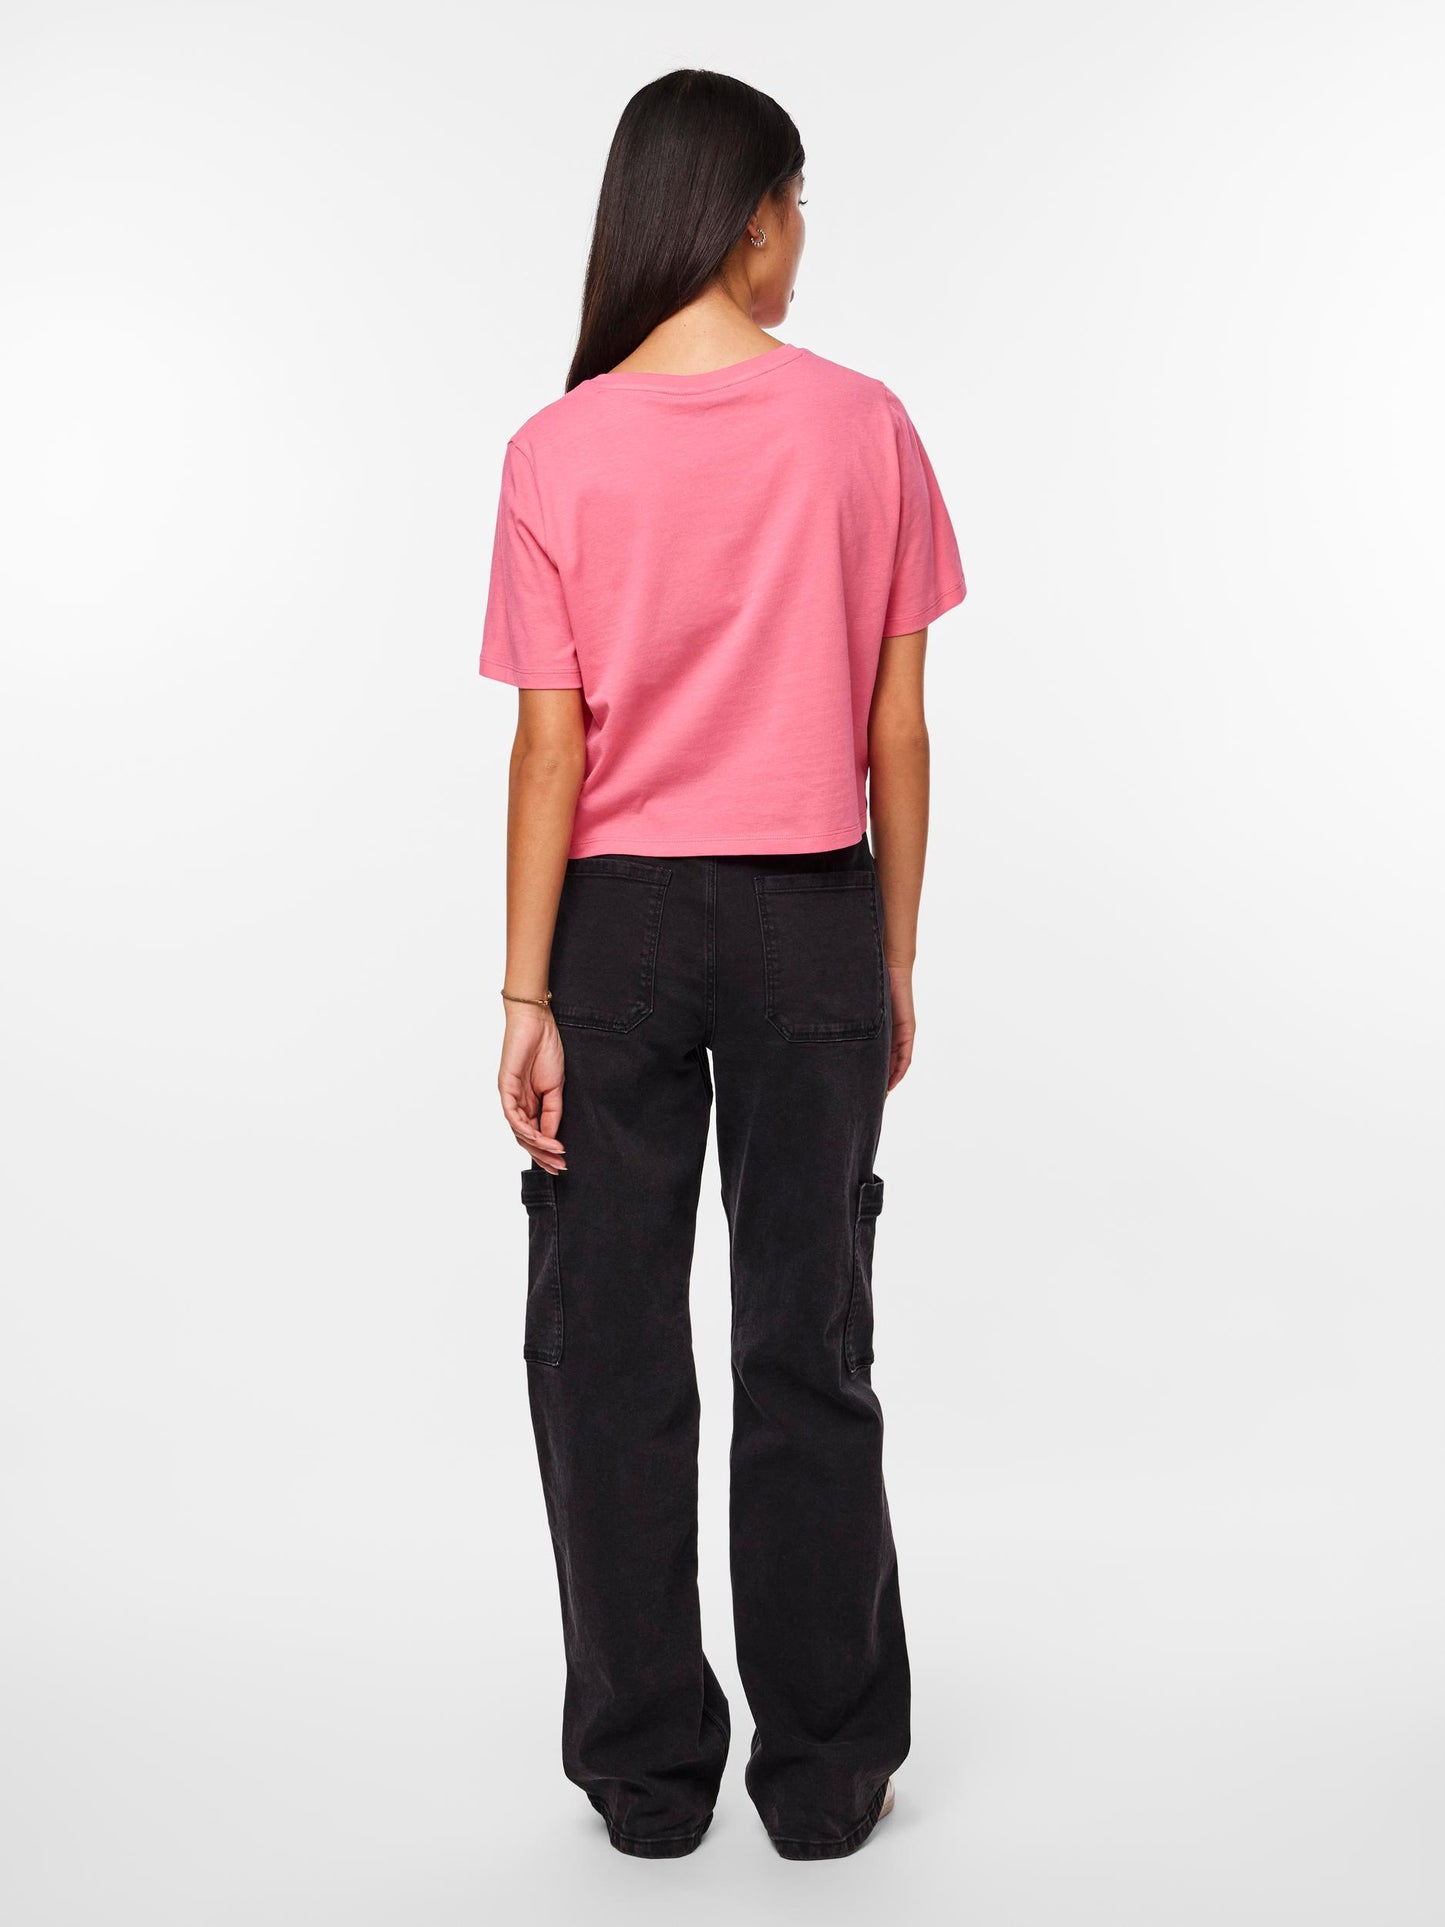 
                  
                    PCSARA Hot Pink T-Shirt
                  
                